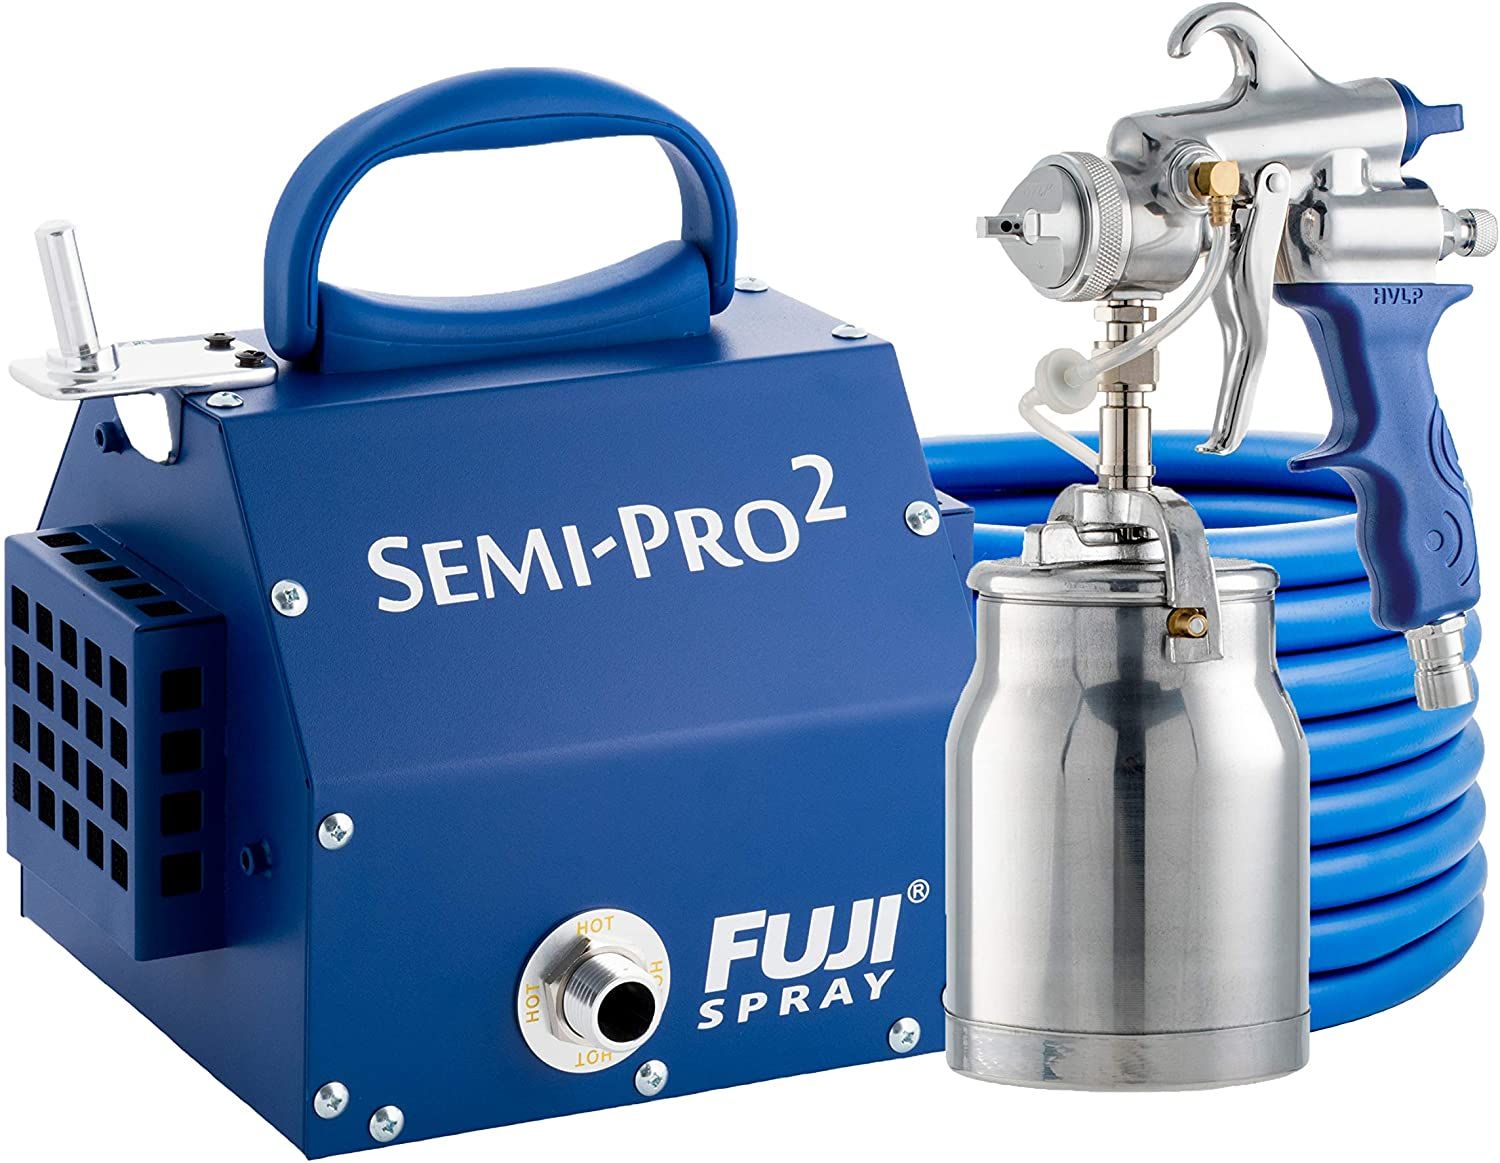 Fuji Semi-Pro 2 HVLP Spray System